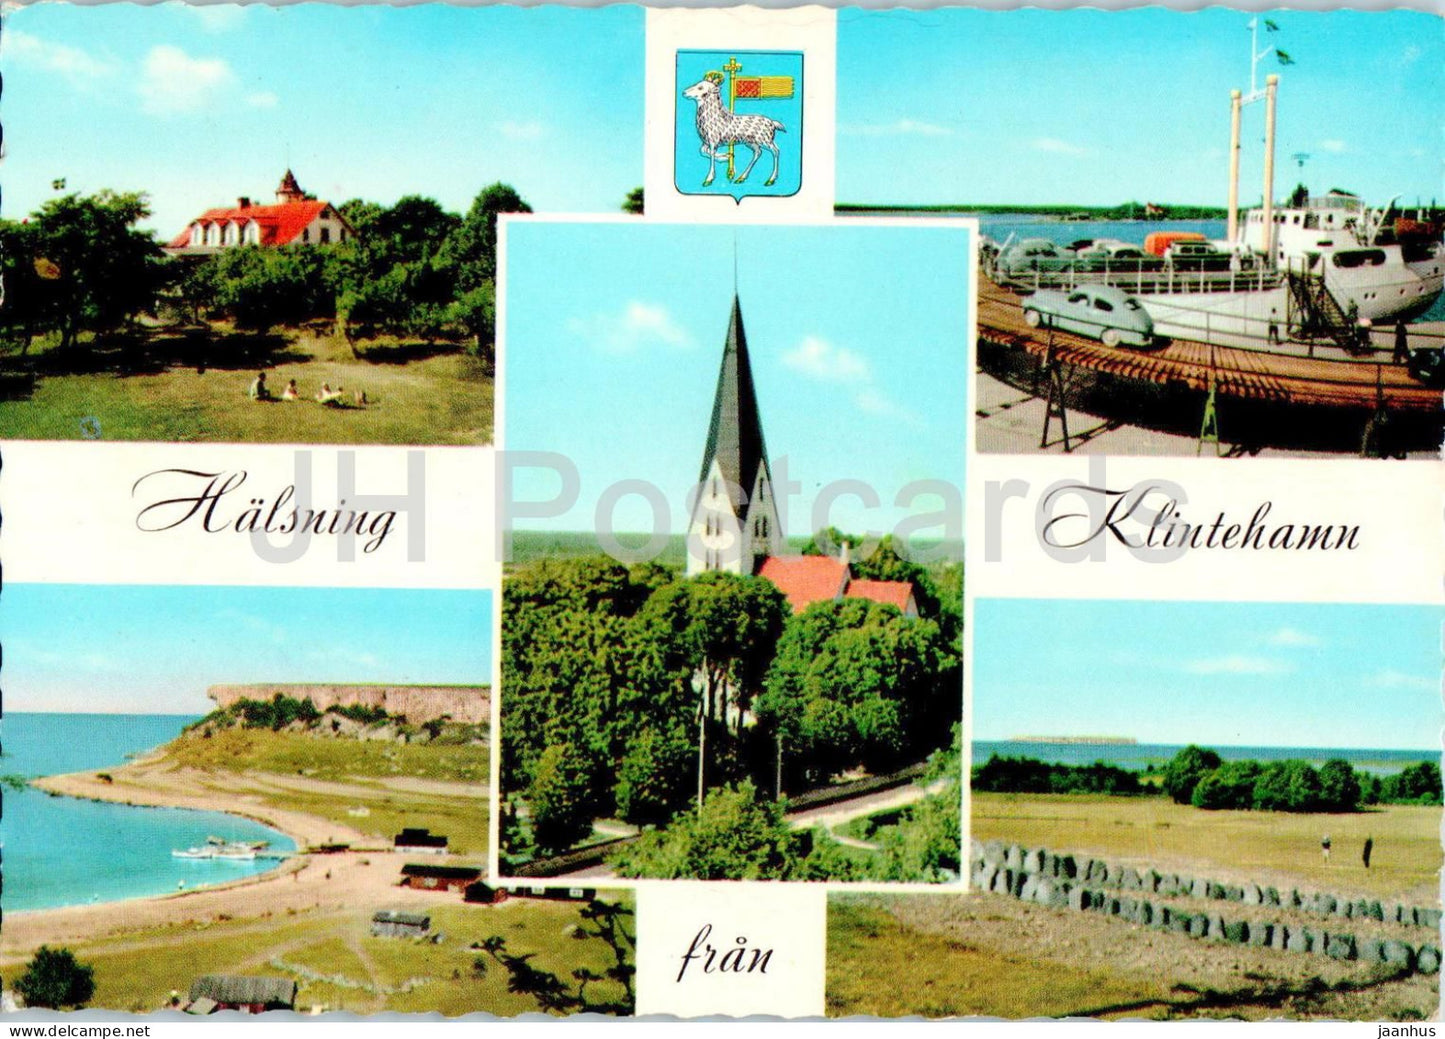 Halsning fran Klintehamn - Warfsholm pansionat - Kyrkan - Stora Karlso - ship - multiview - 1961 - Sweden - used - JH Postcards